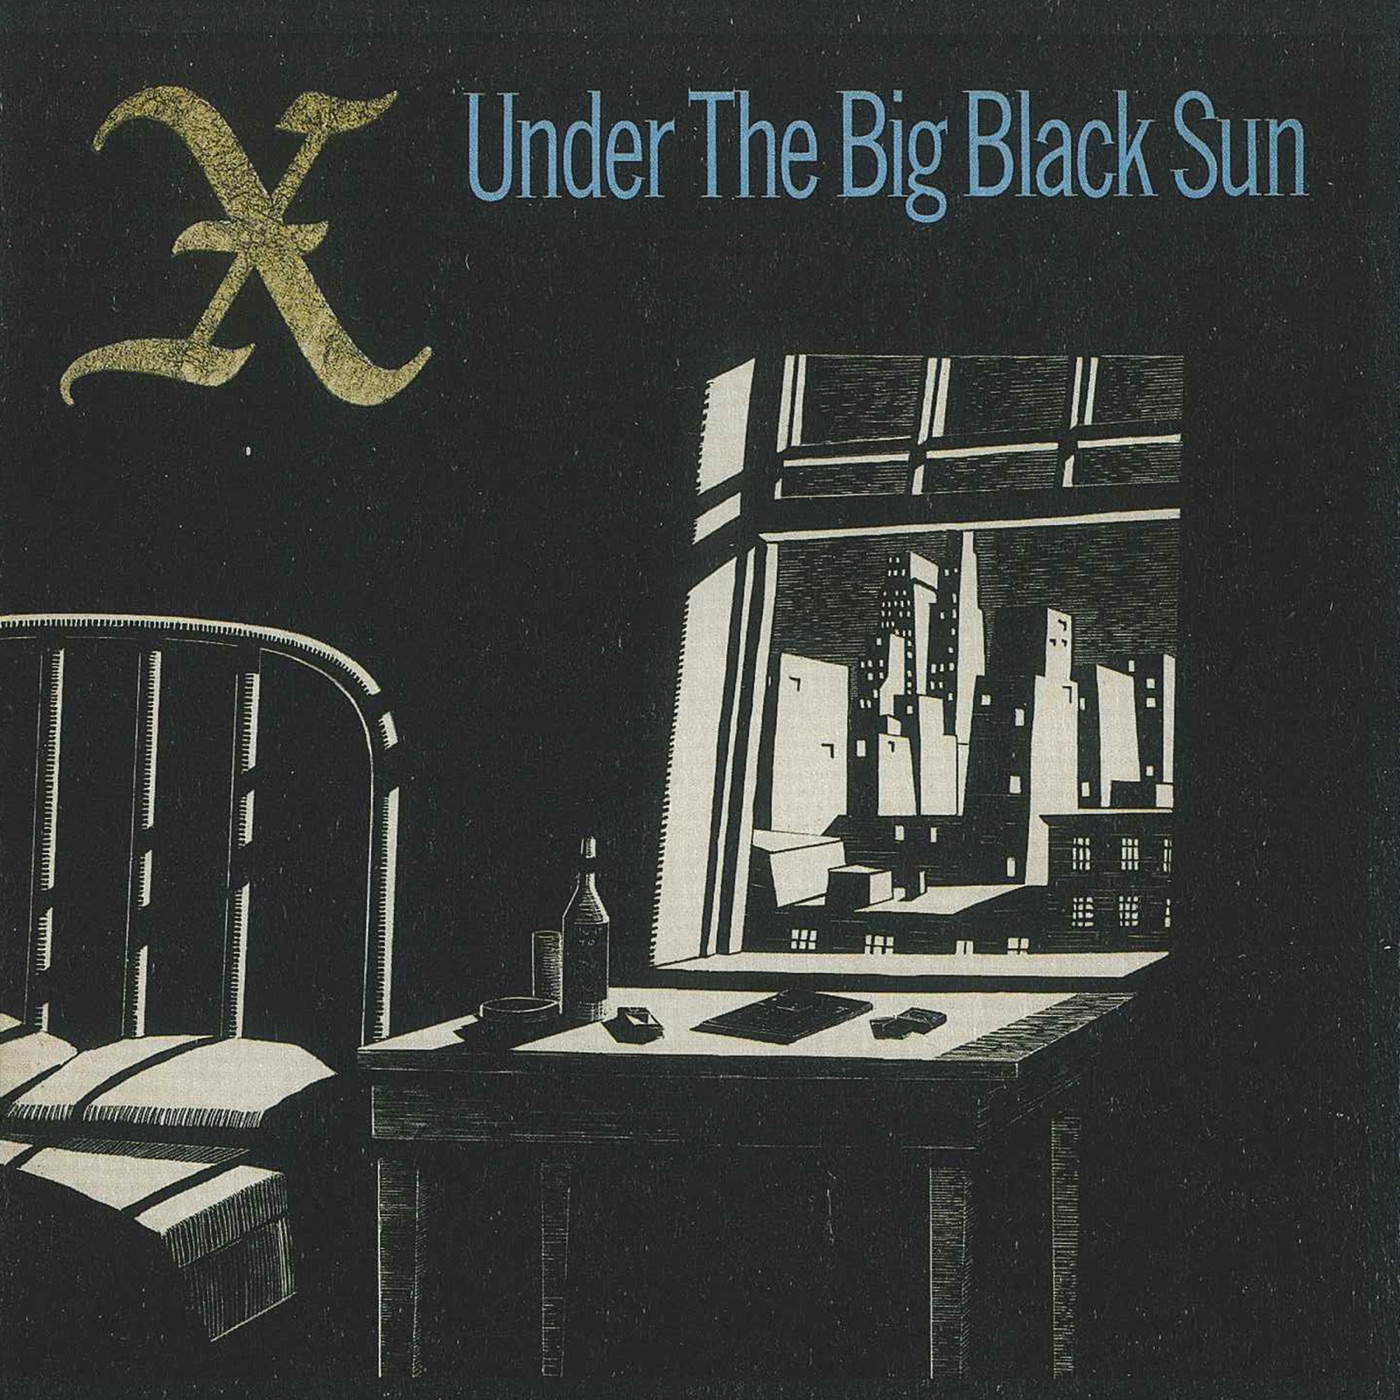 Under the Big Black Sun by X